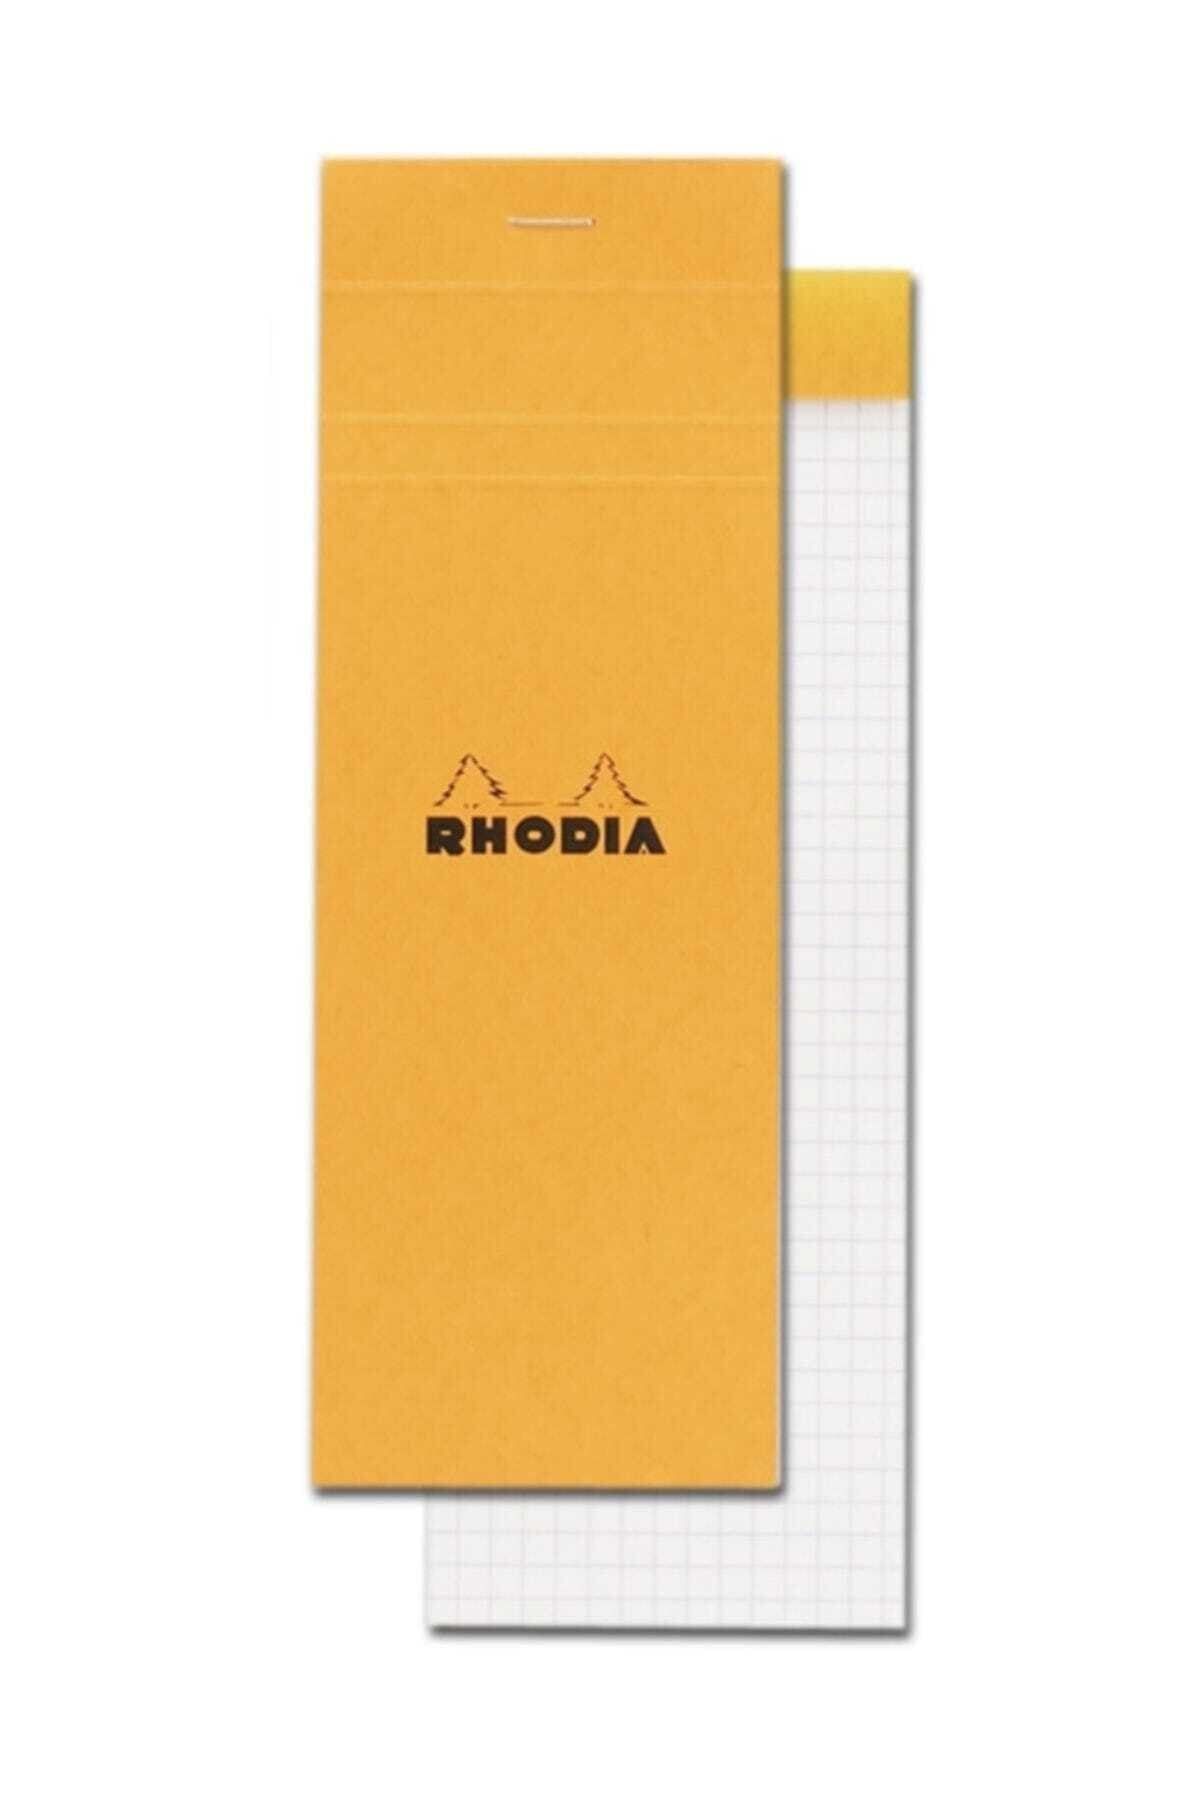 Rhodia 7,4x21cm Kareli Blok Turuncu Kapak 80 Yaprak